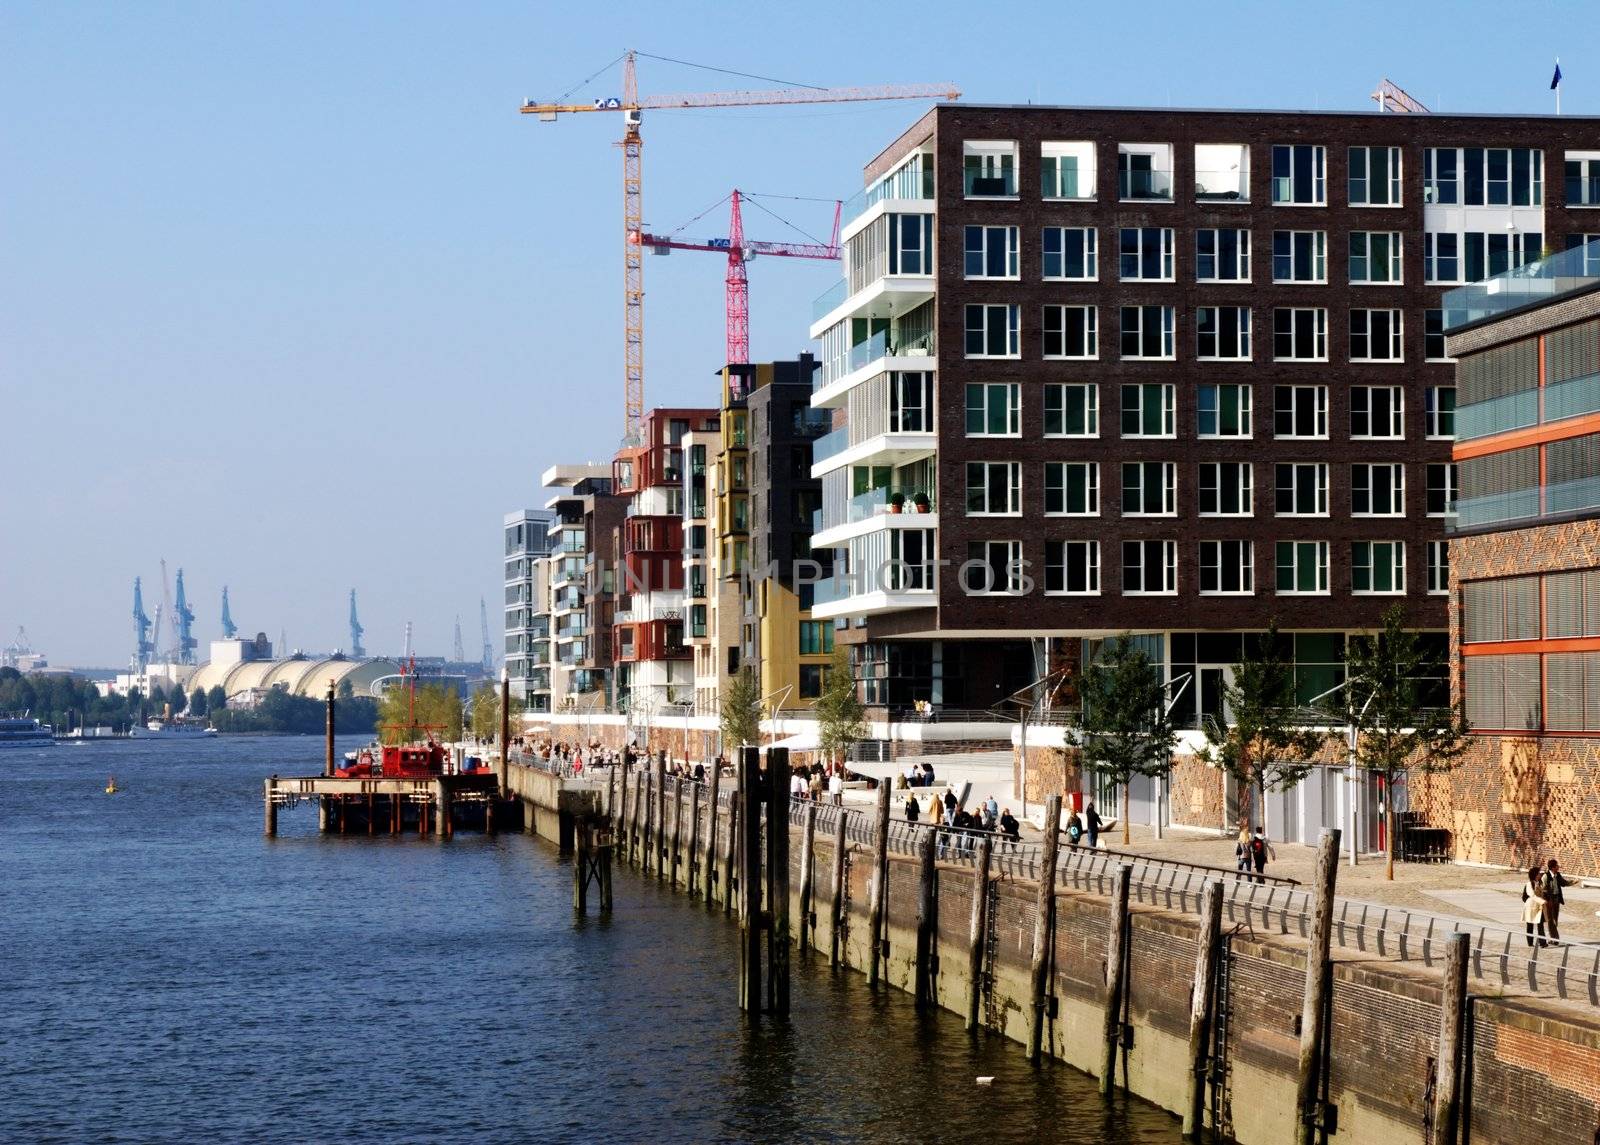 HafenCity by FotoFrank